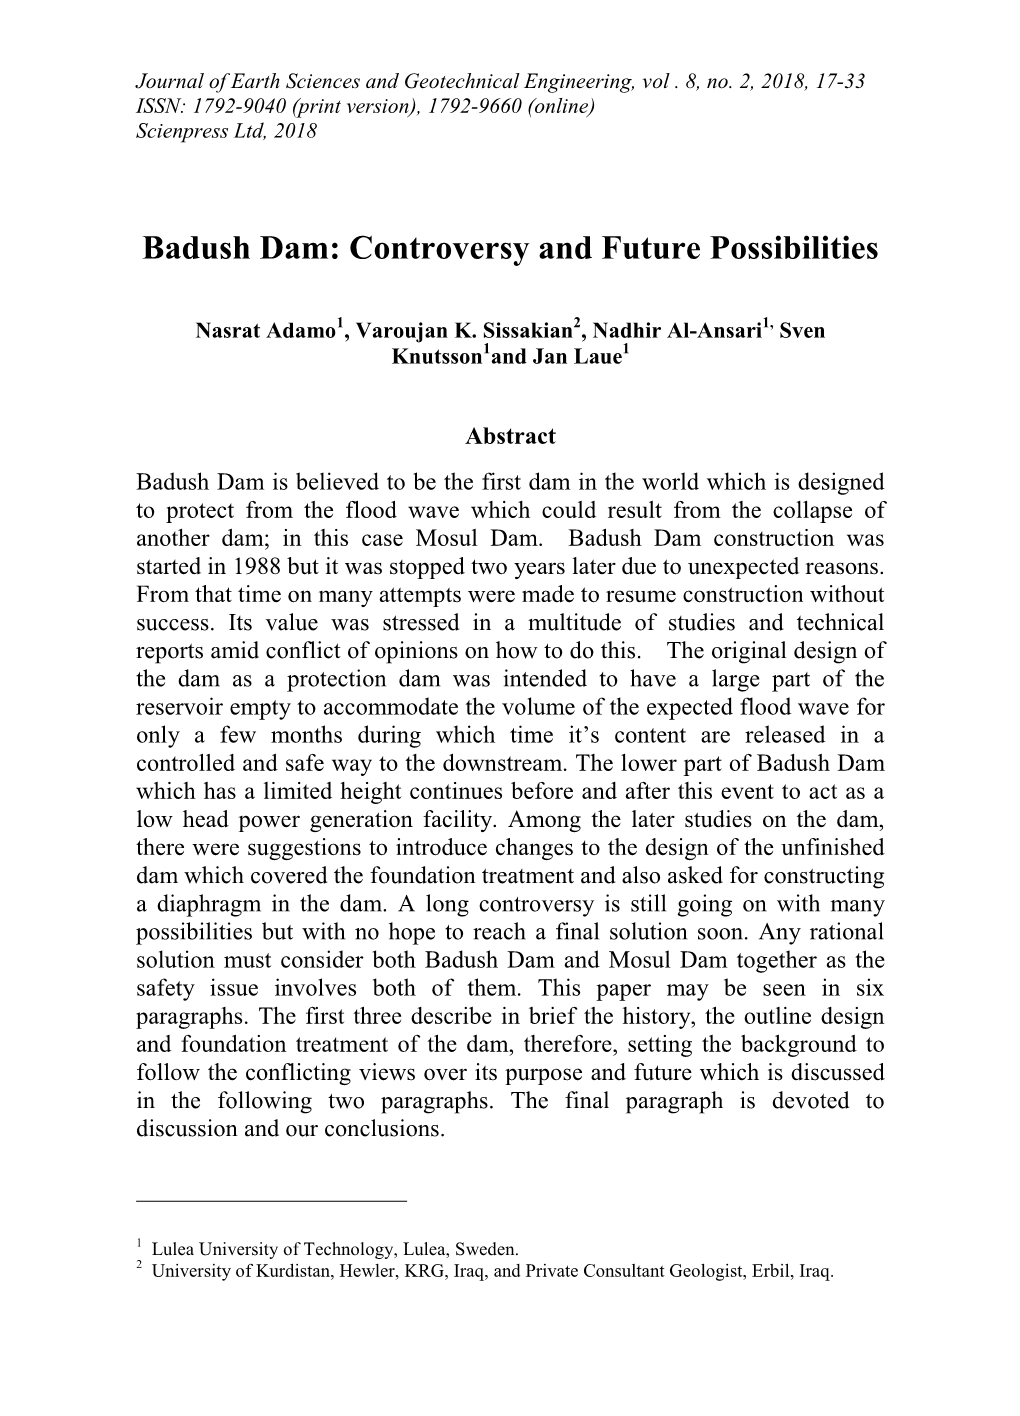 Badush Dam: Controversy and Future Possibilities